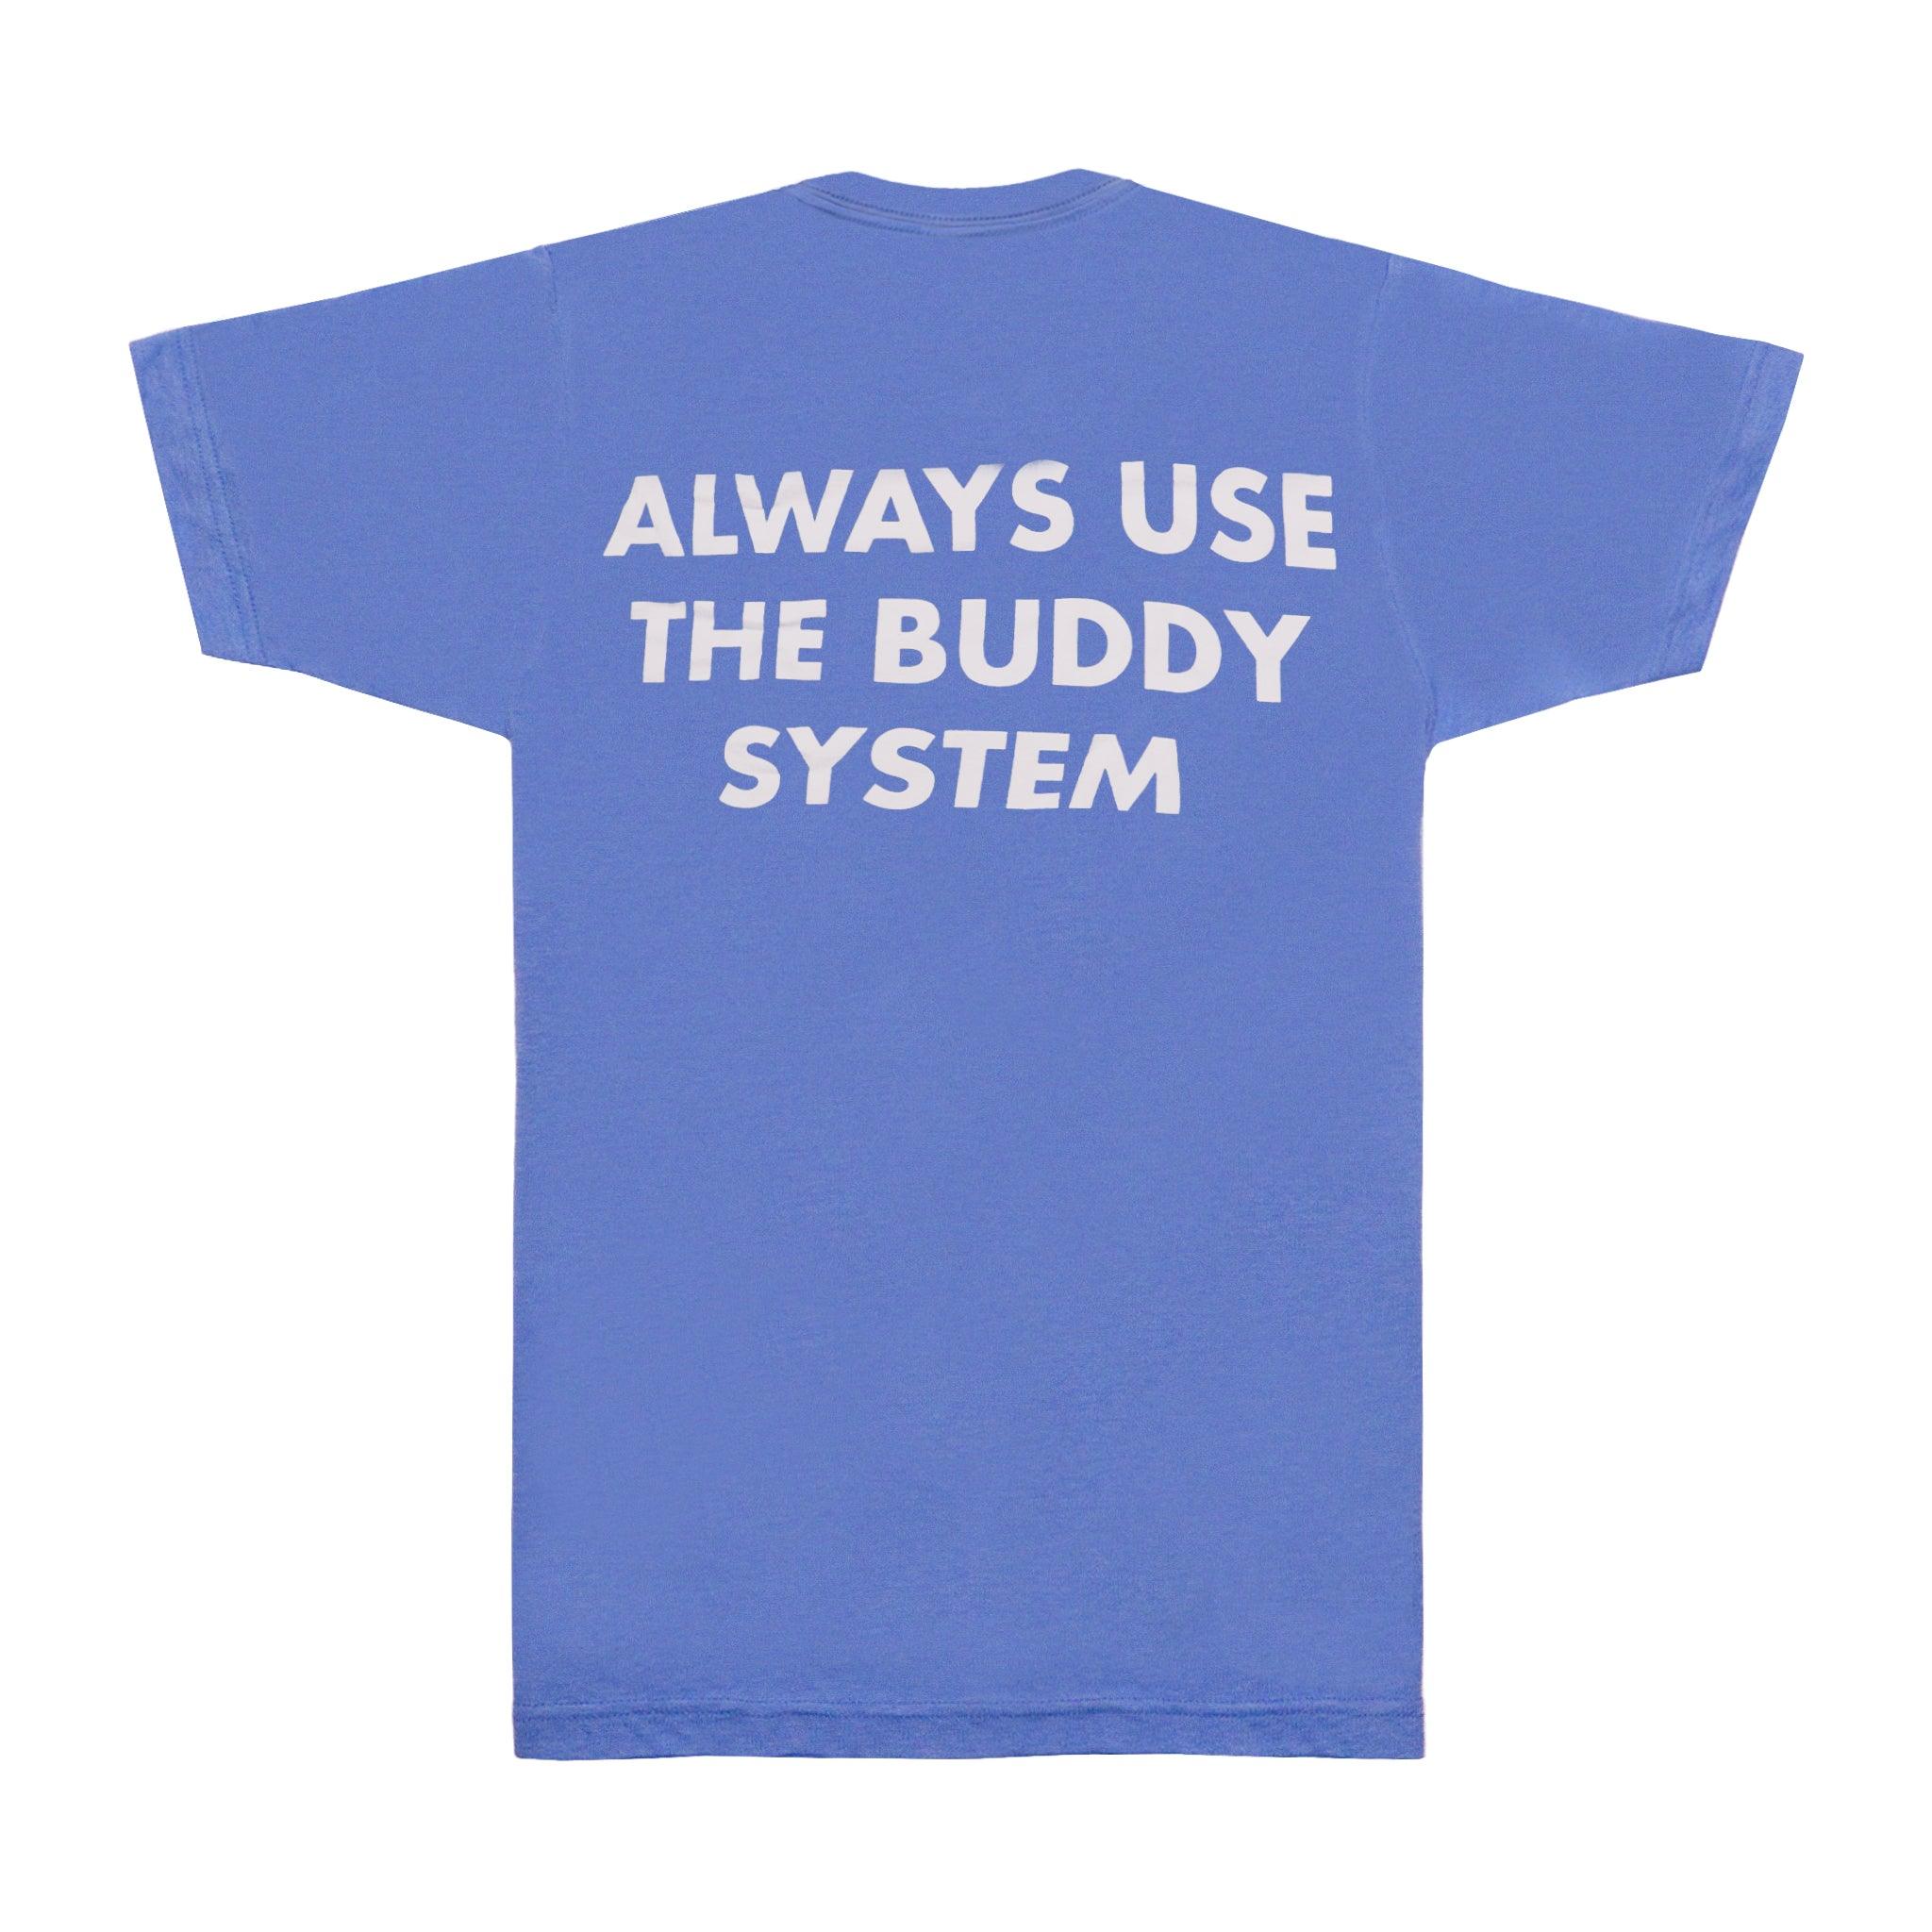 Busch Light x Jack Links - Always Use the Buddy System T-shirt - Back